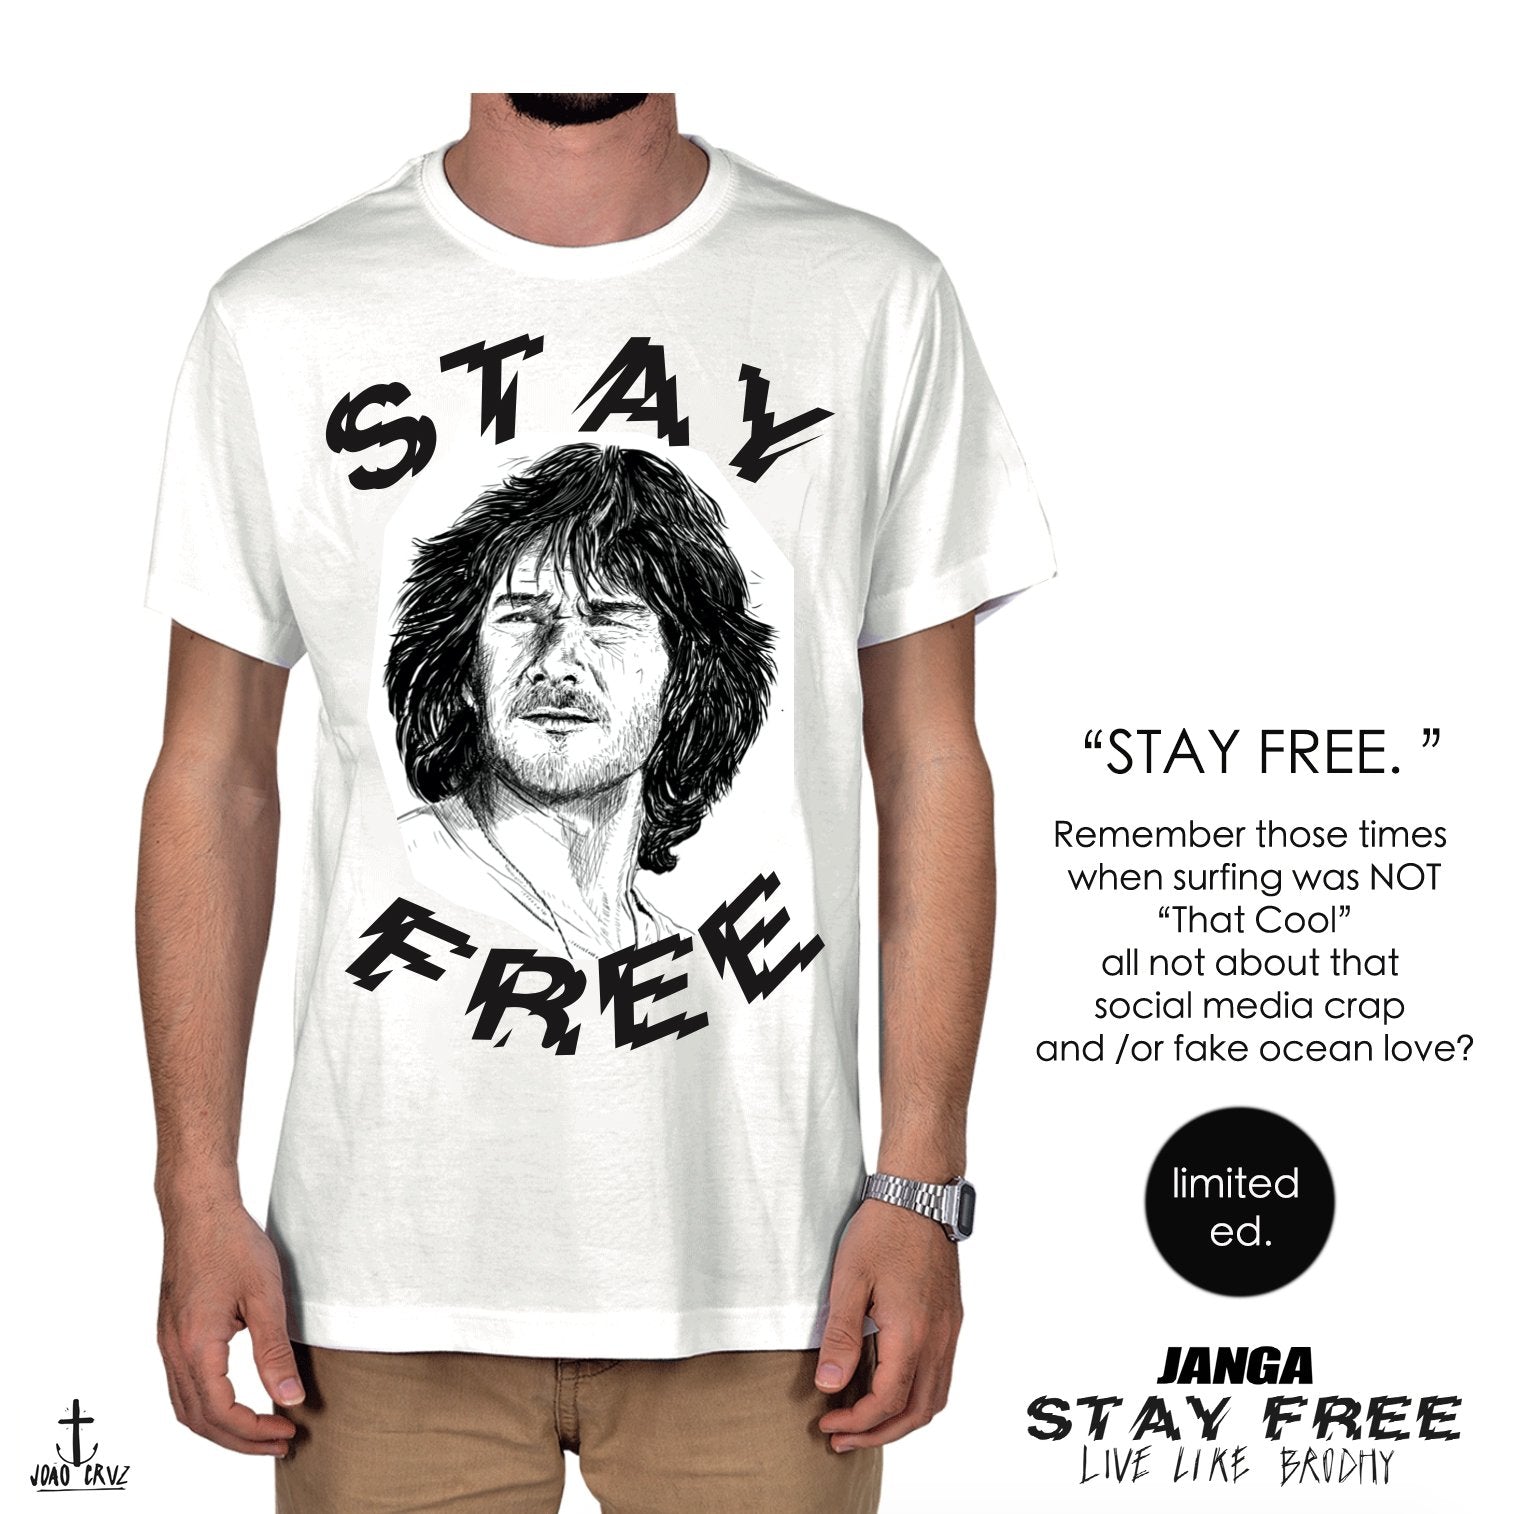 STAY FREE T-SHIRT